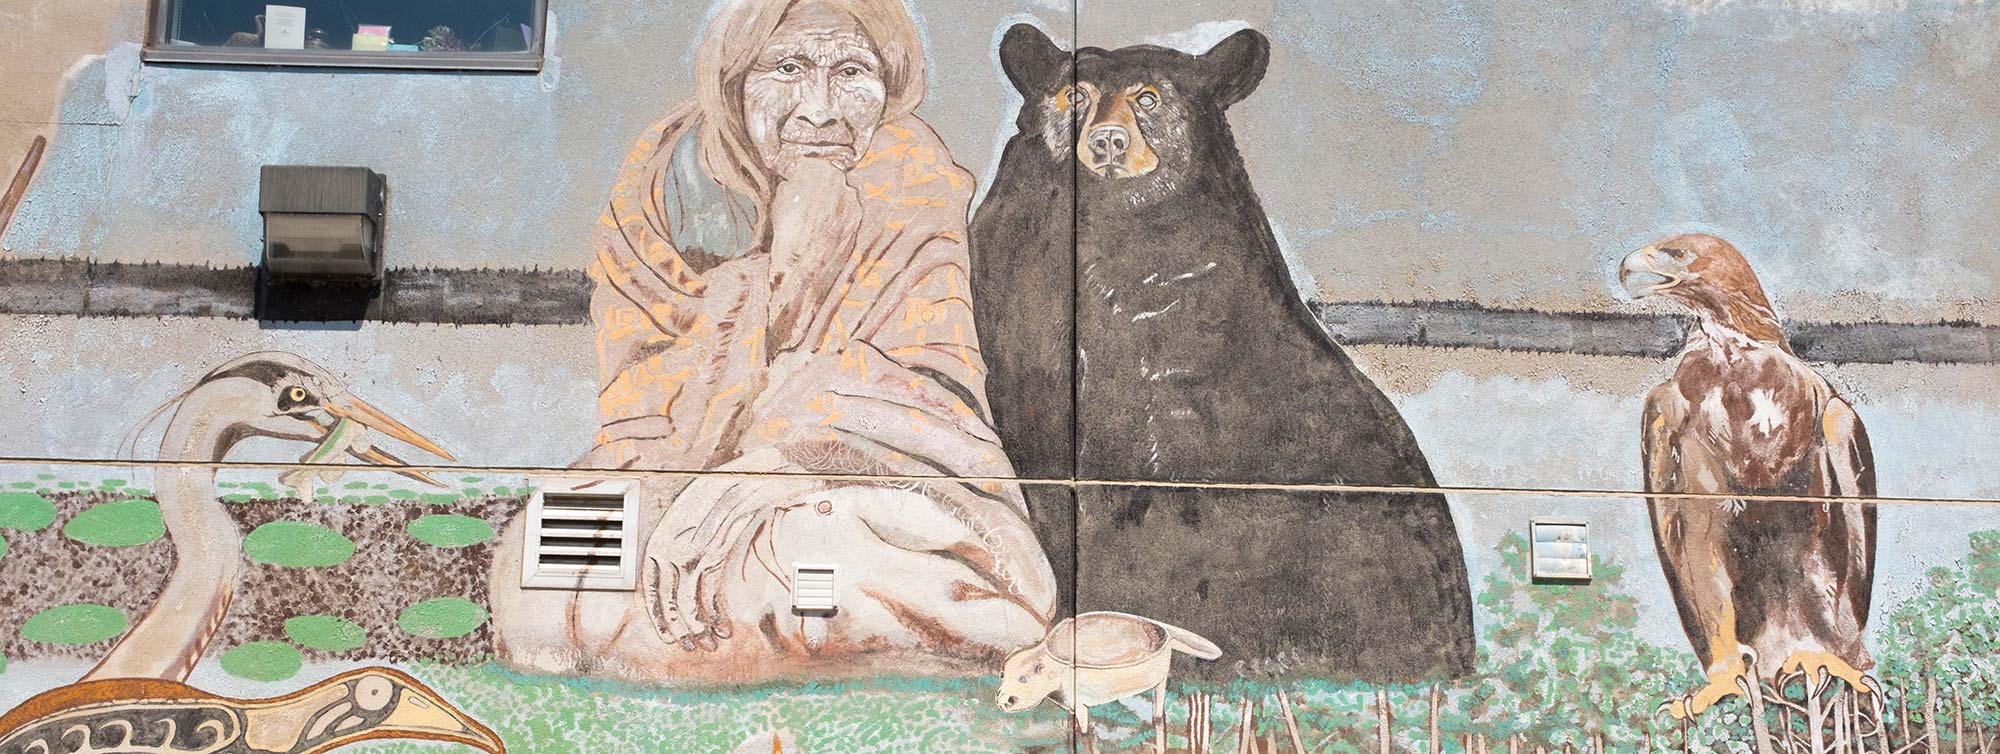 Un mur mural d'un homme indigène